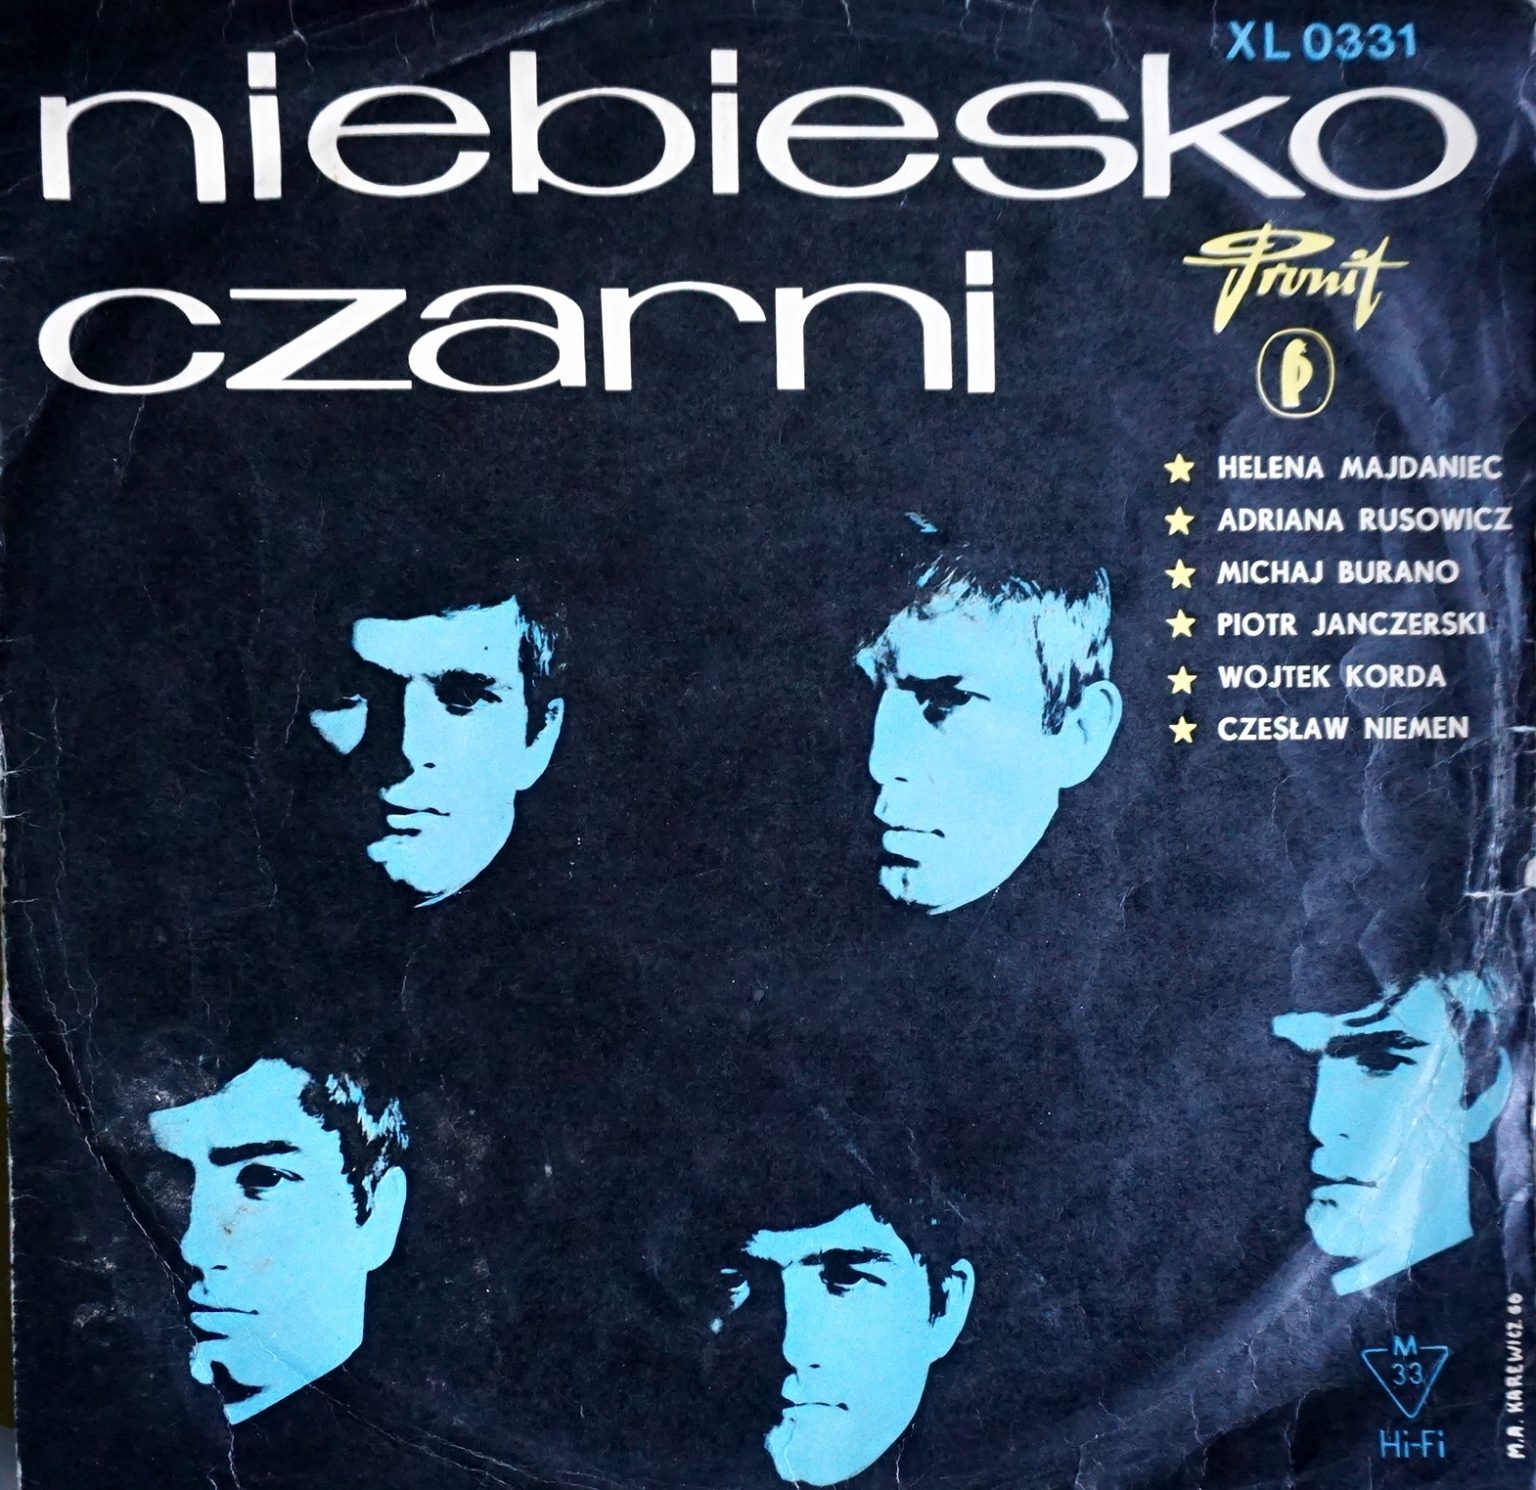 Niebiesko Czarni – Niebiesko Czarni [Vinyl LP] (G/G)